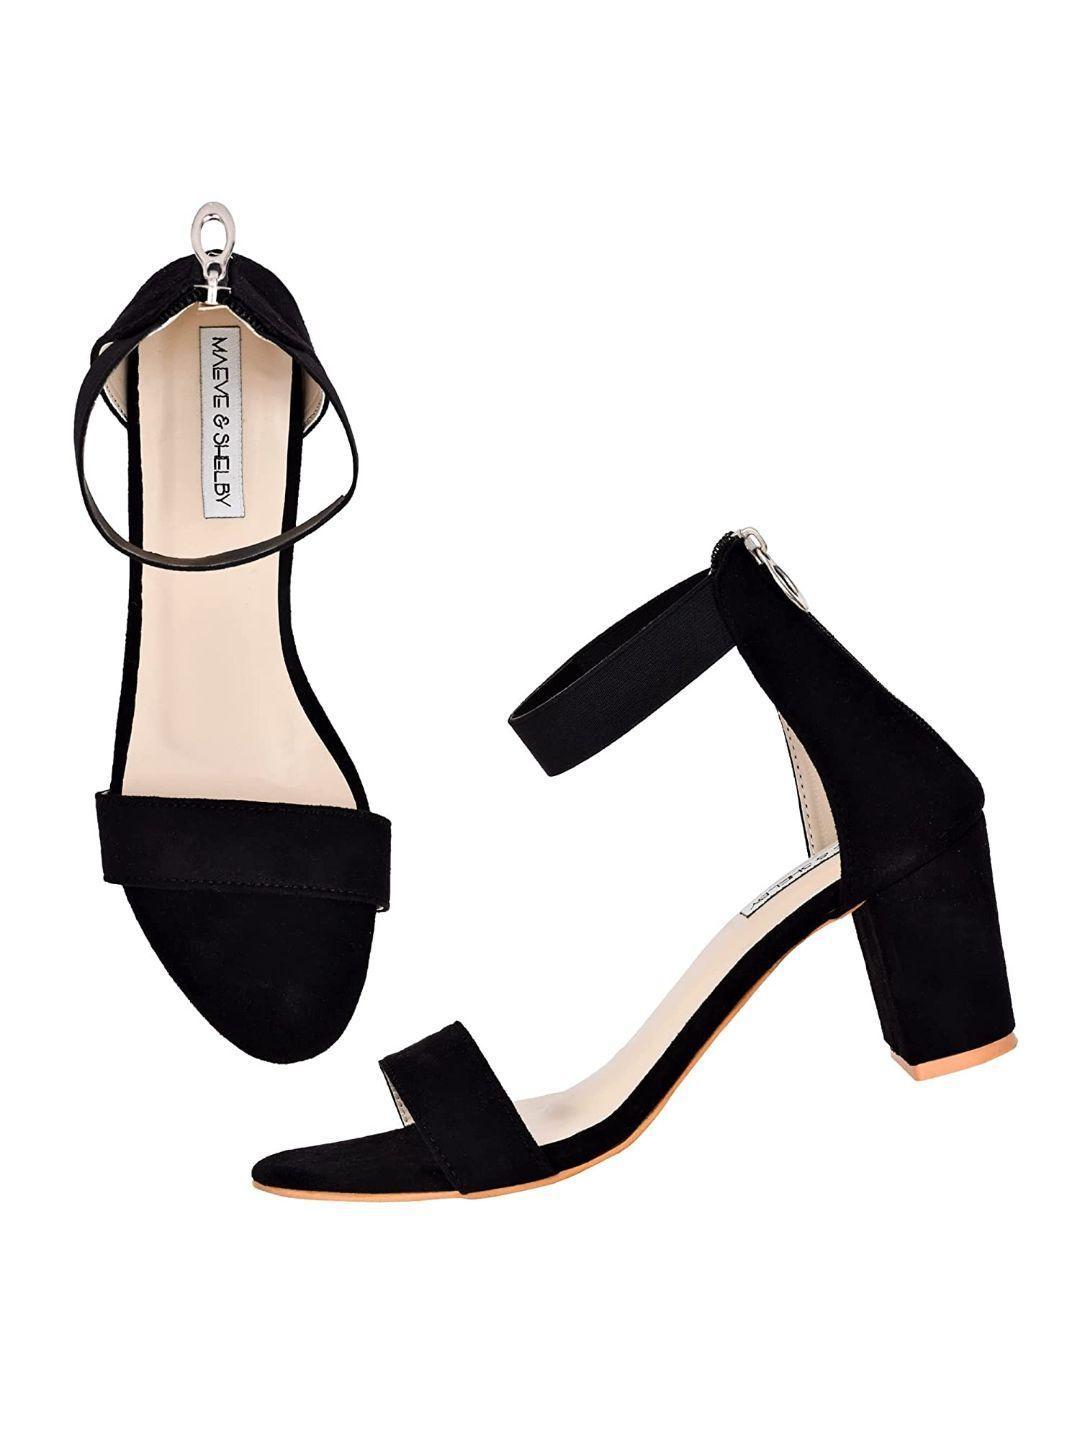 MAEVE & SHELBY Women Stylish Fashion Block Heels Black Sandals